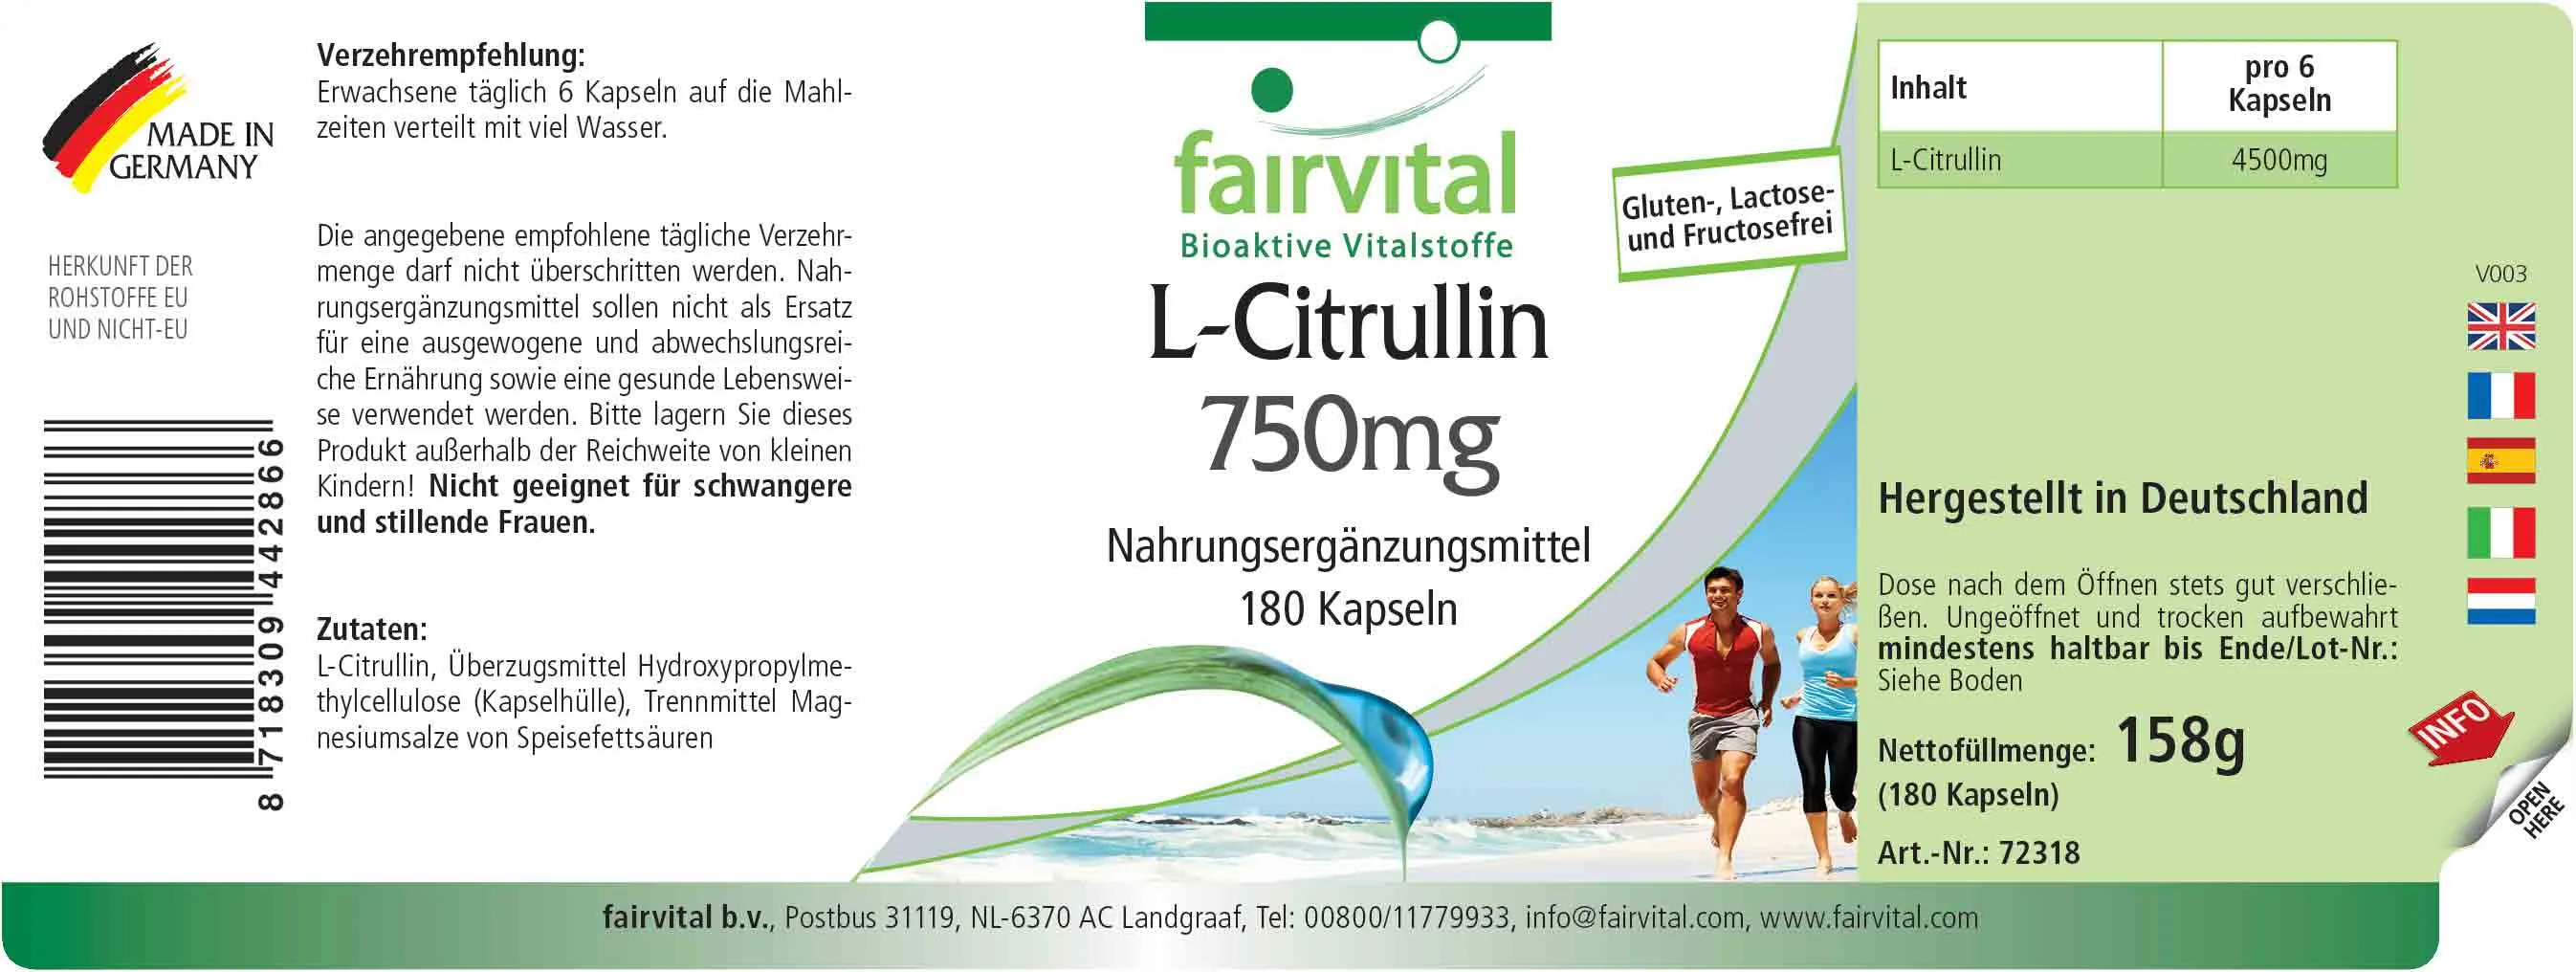 L-Citrullin 750mg